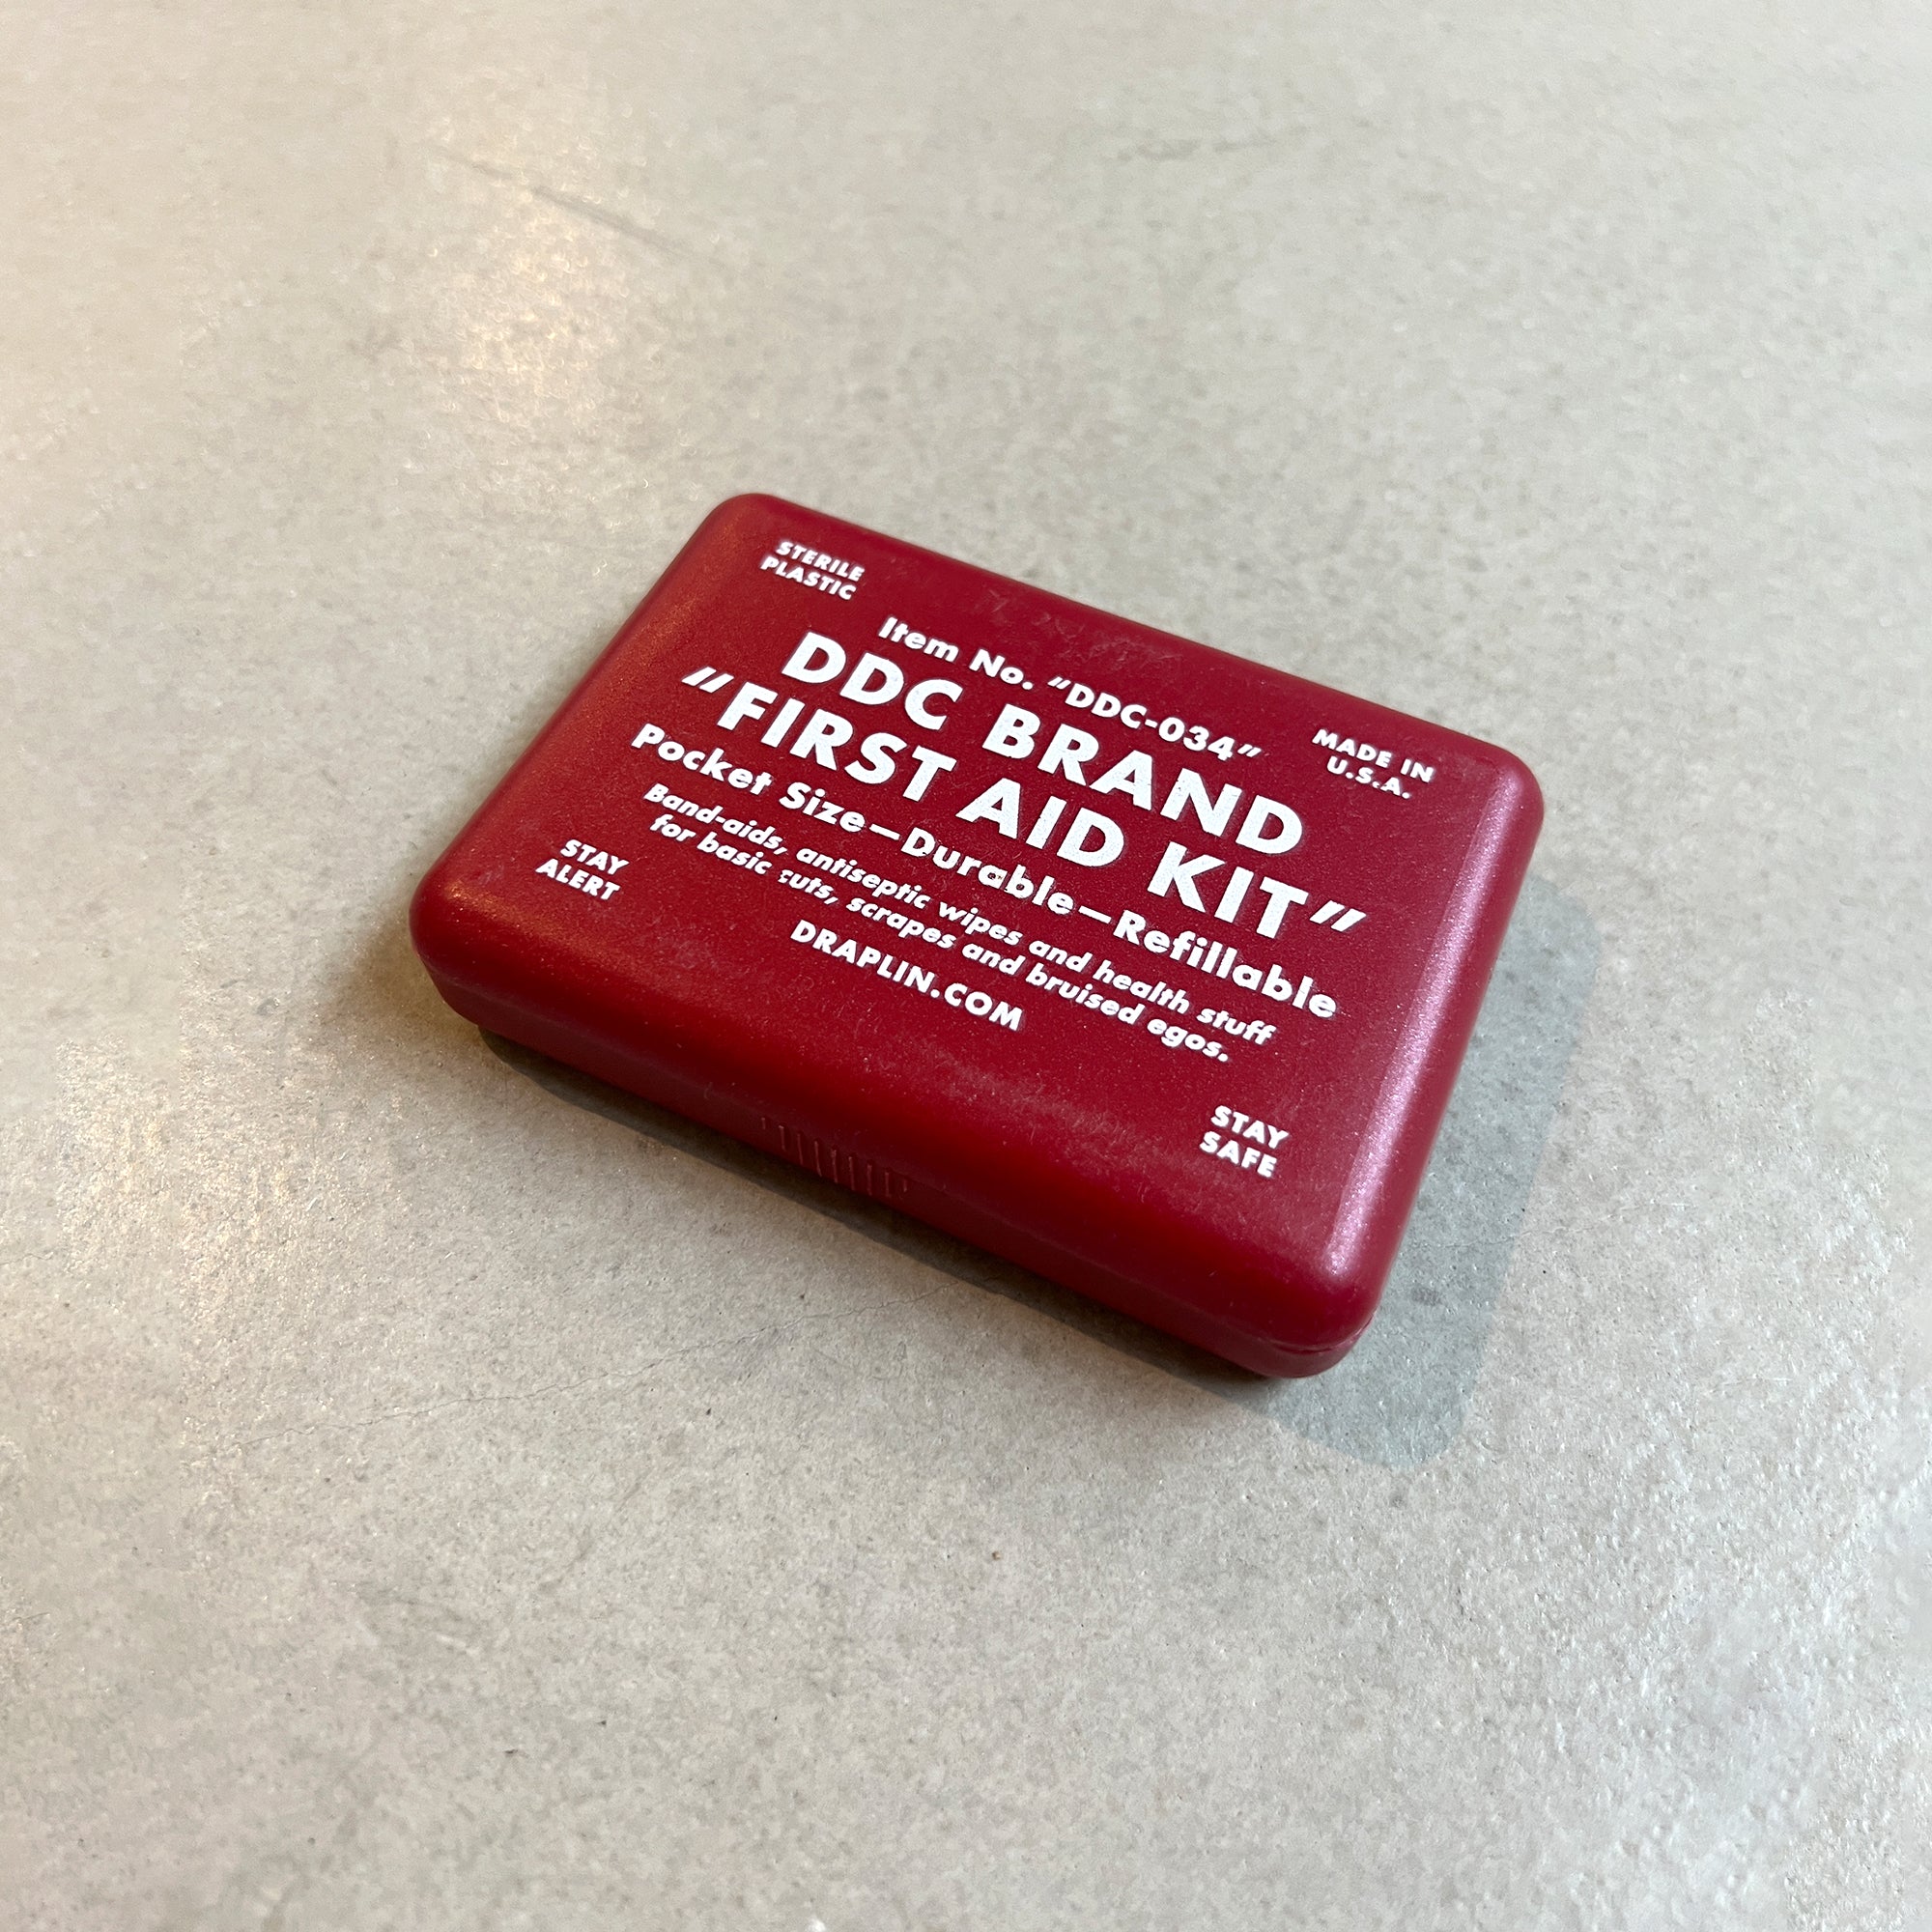 DDC-034 "DDC First Aid Kit"